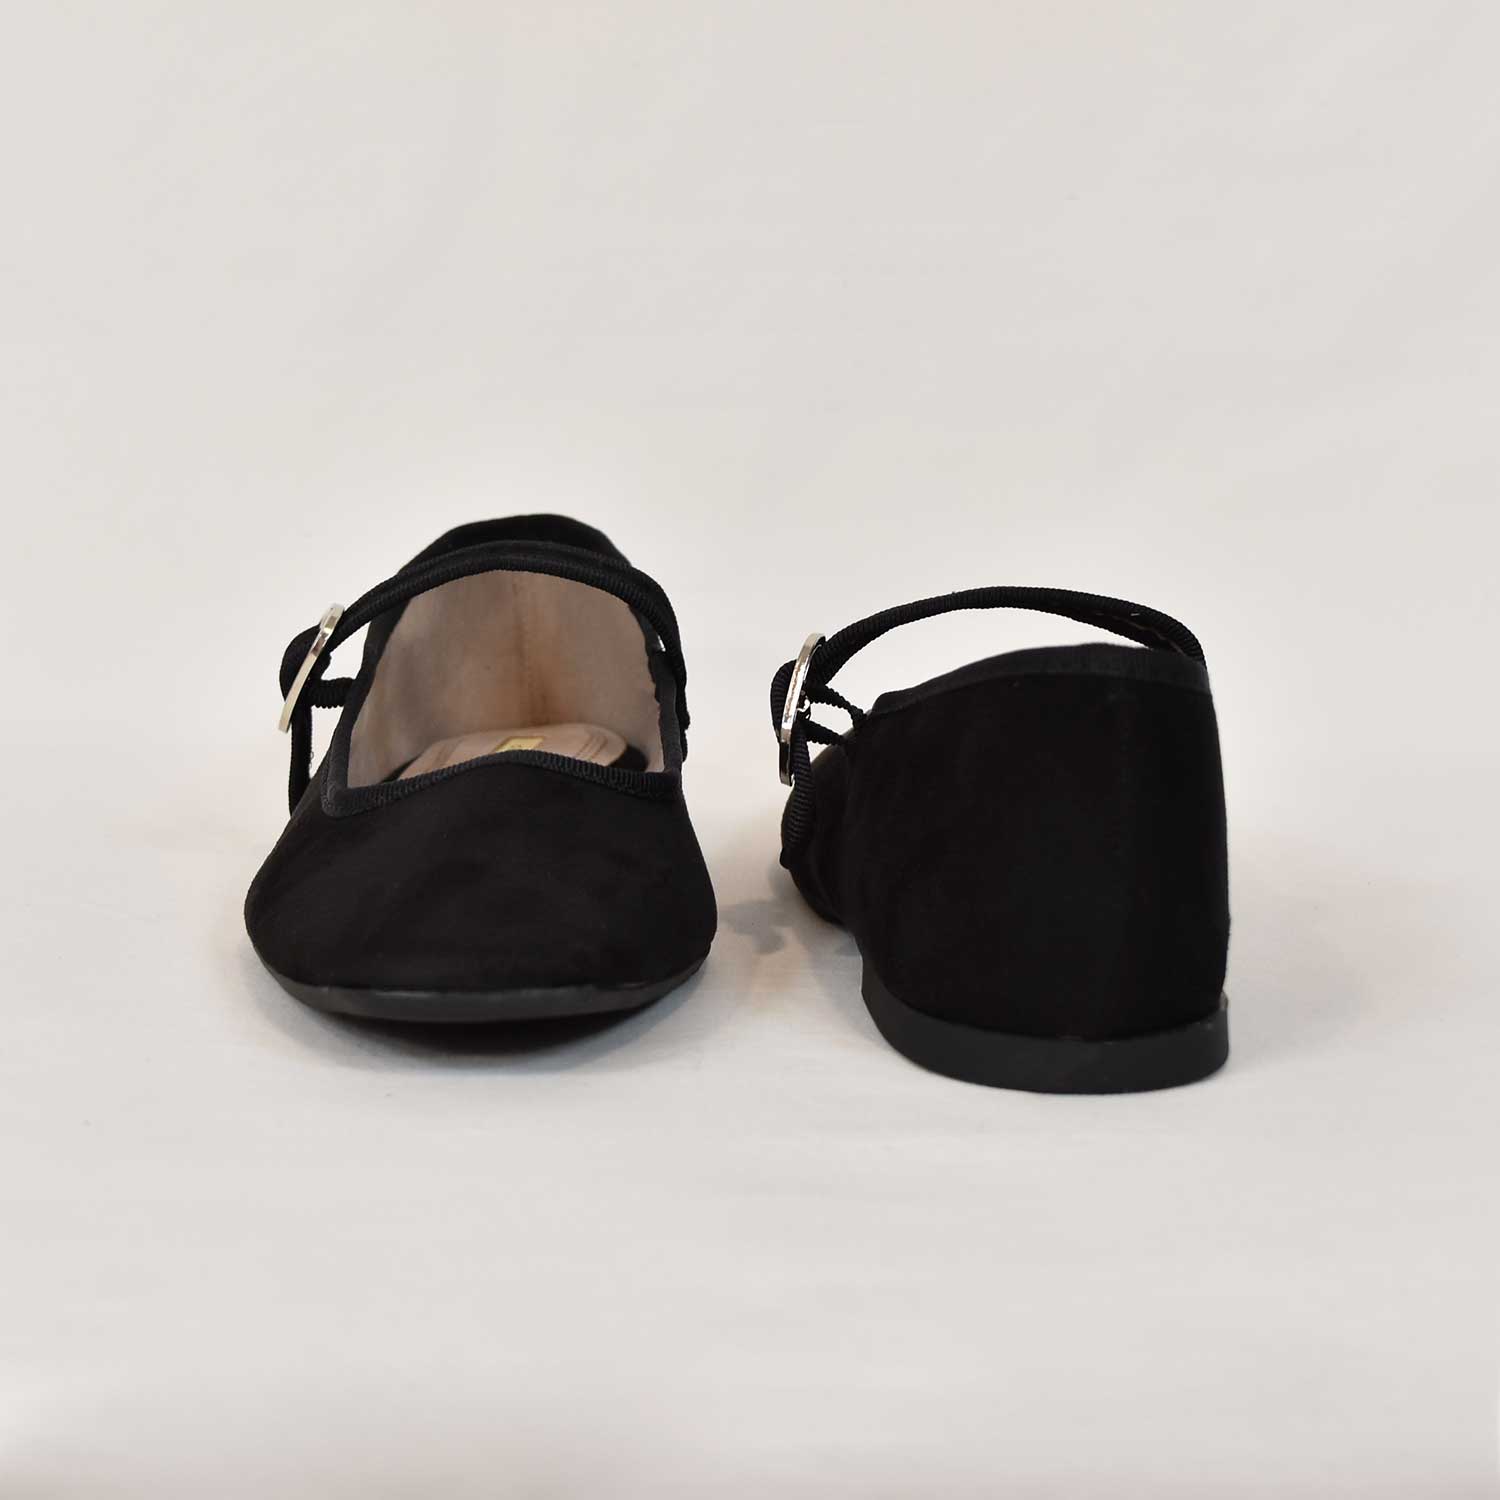 Black Mary Jane shoes